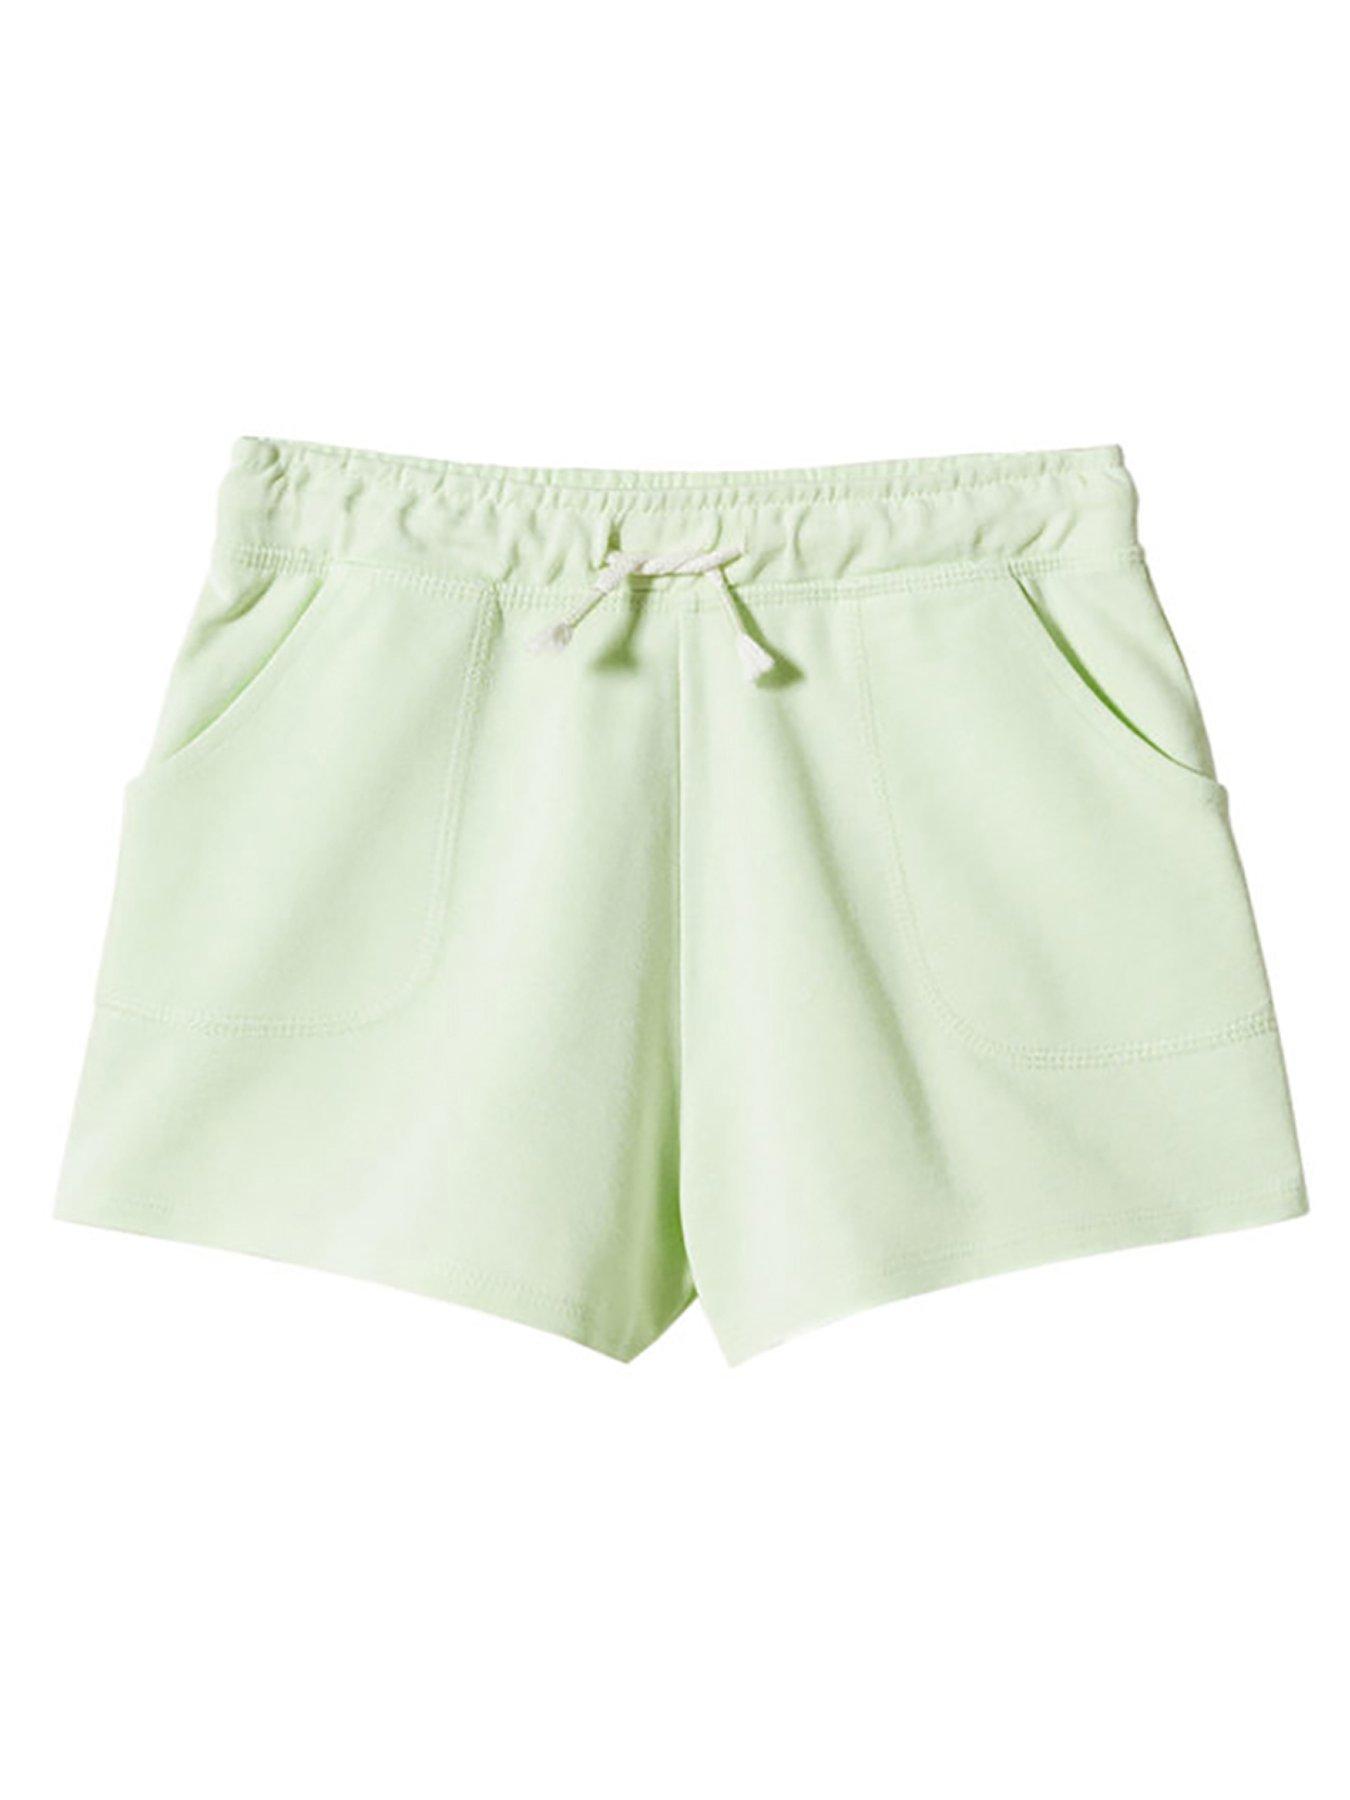 Girls Green Jogger Shorts